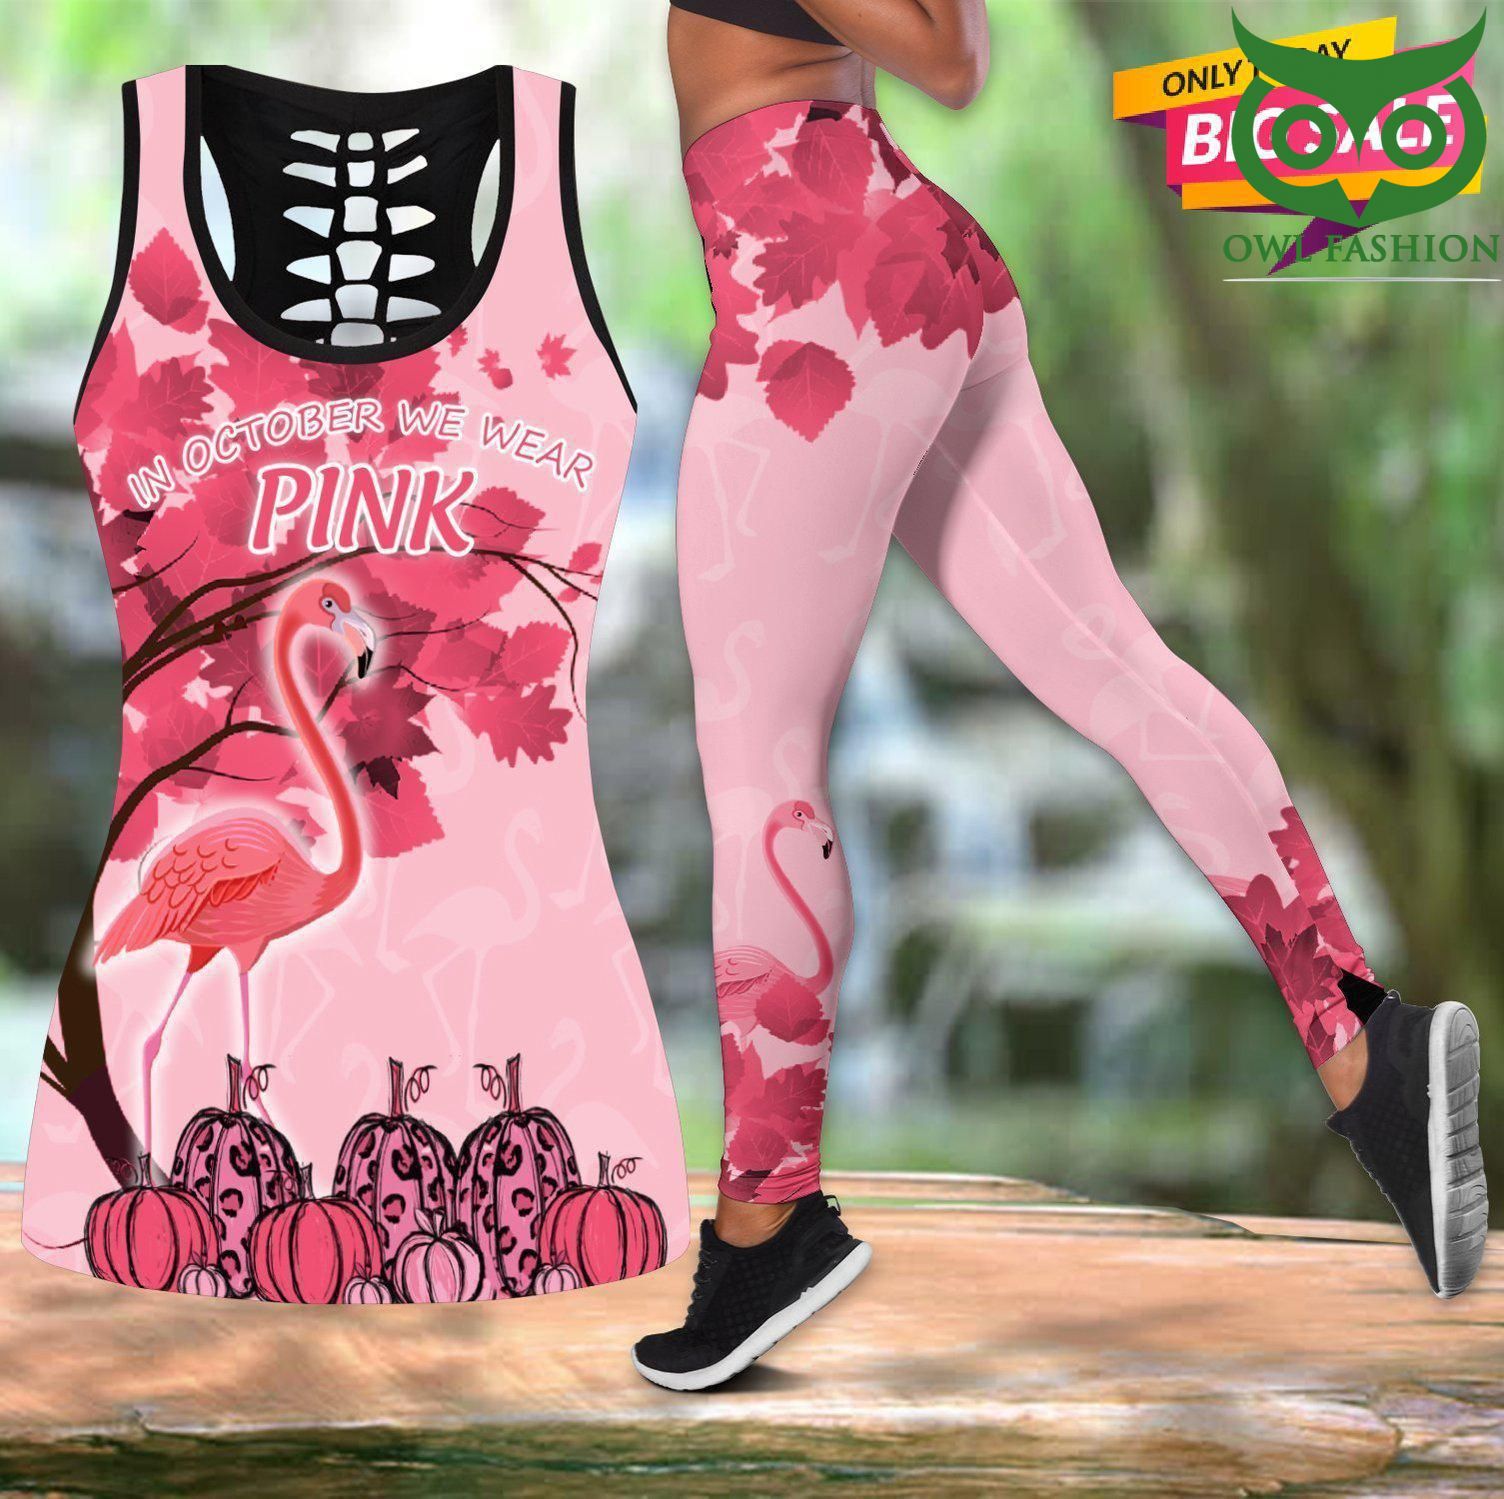 39 Yoga Love Peace In October we wear pink flamingo Tank Top